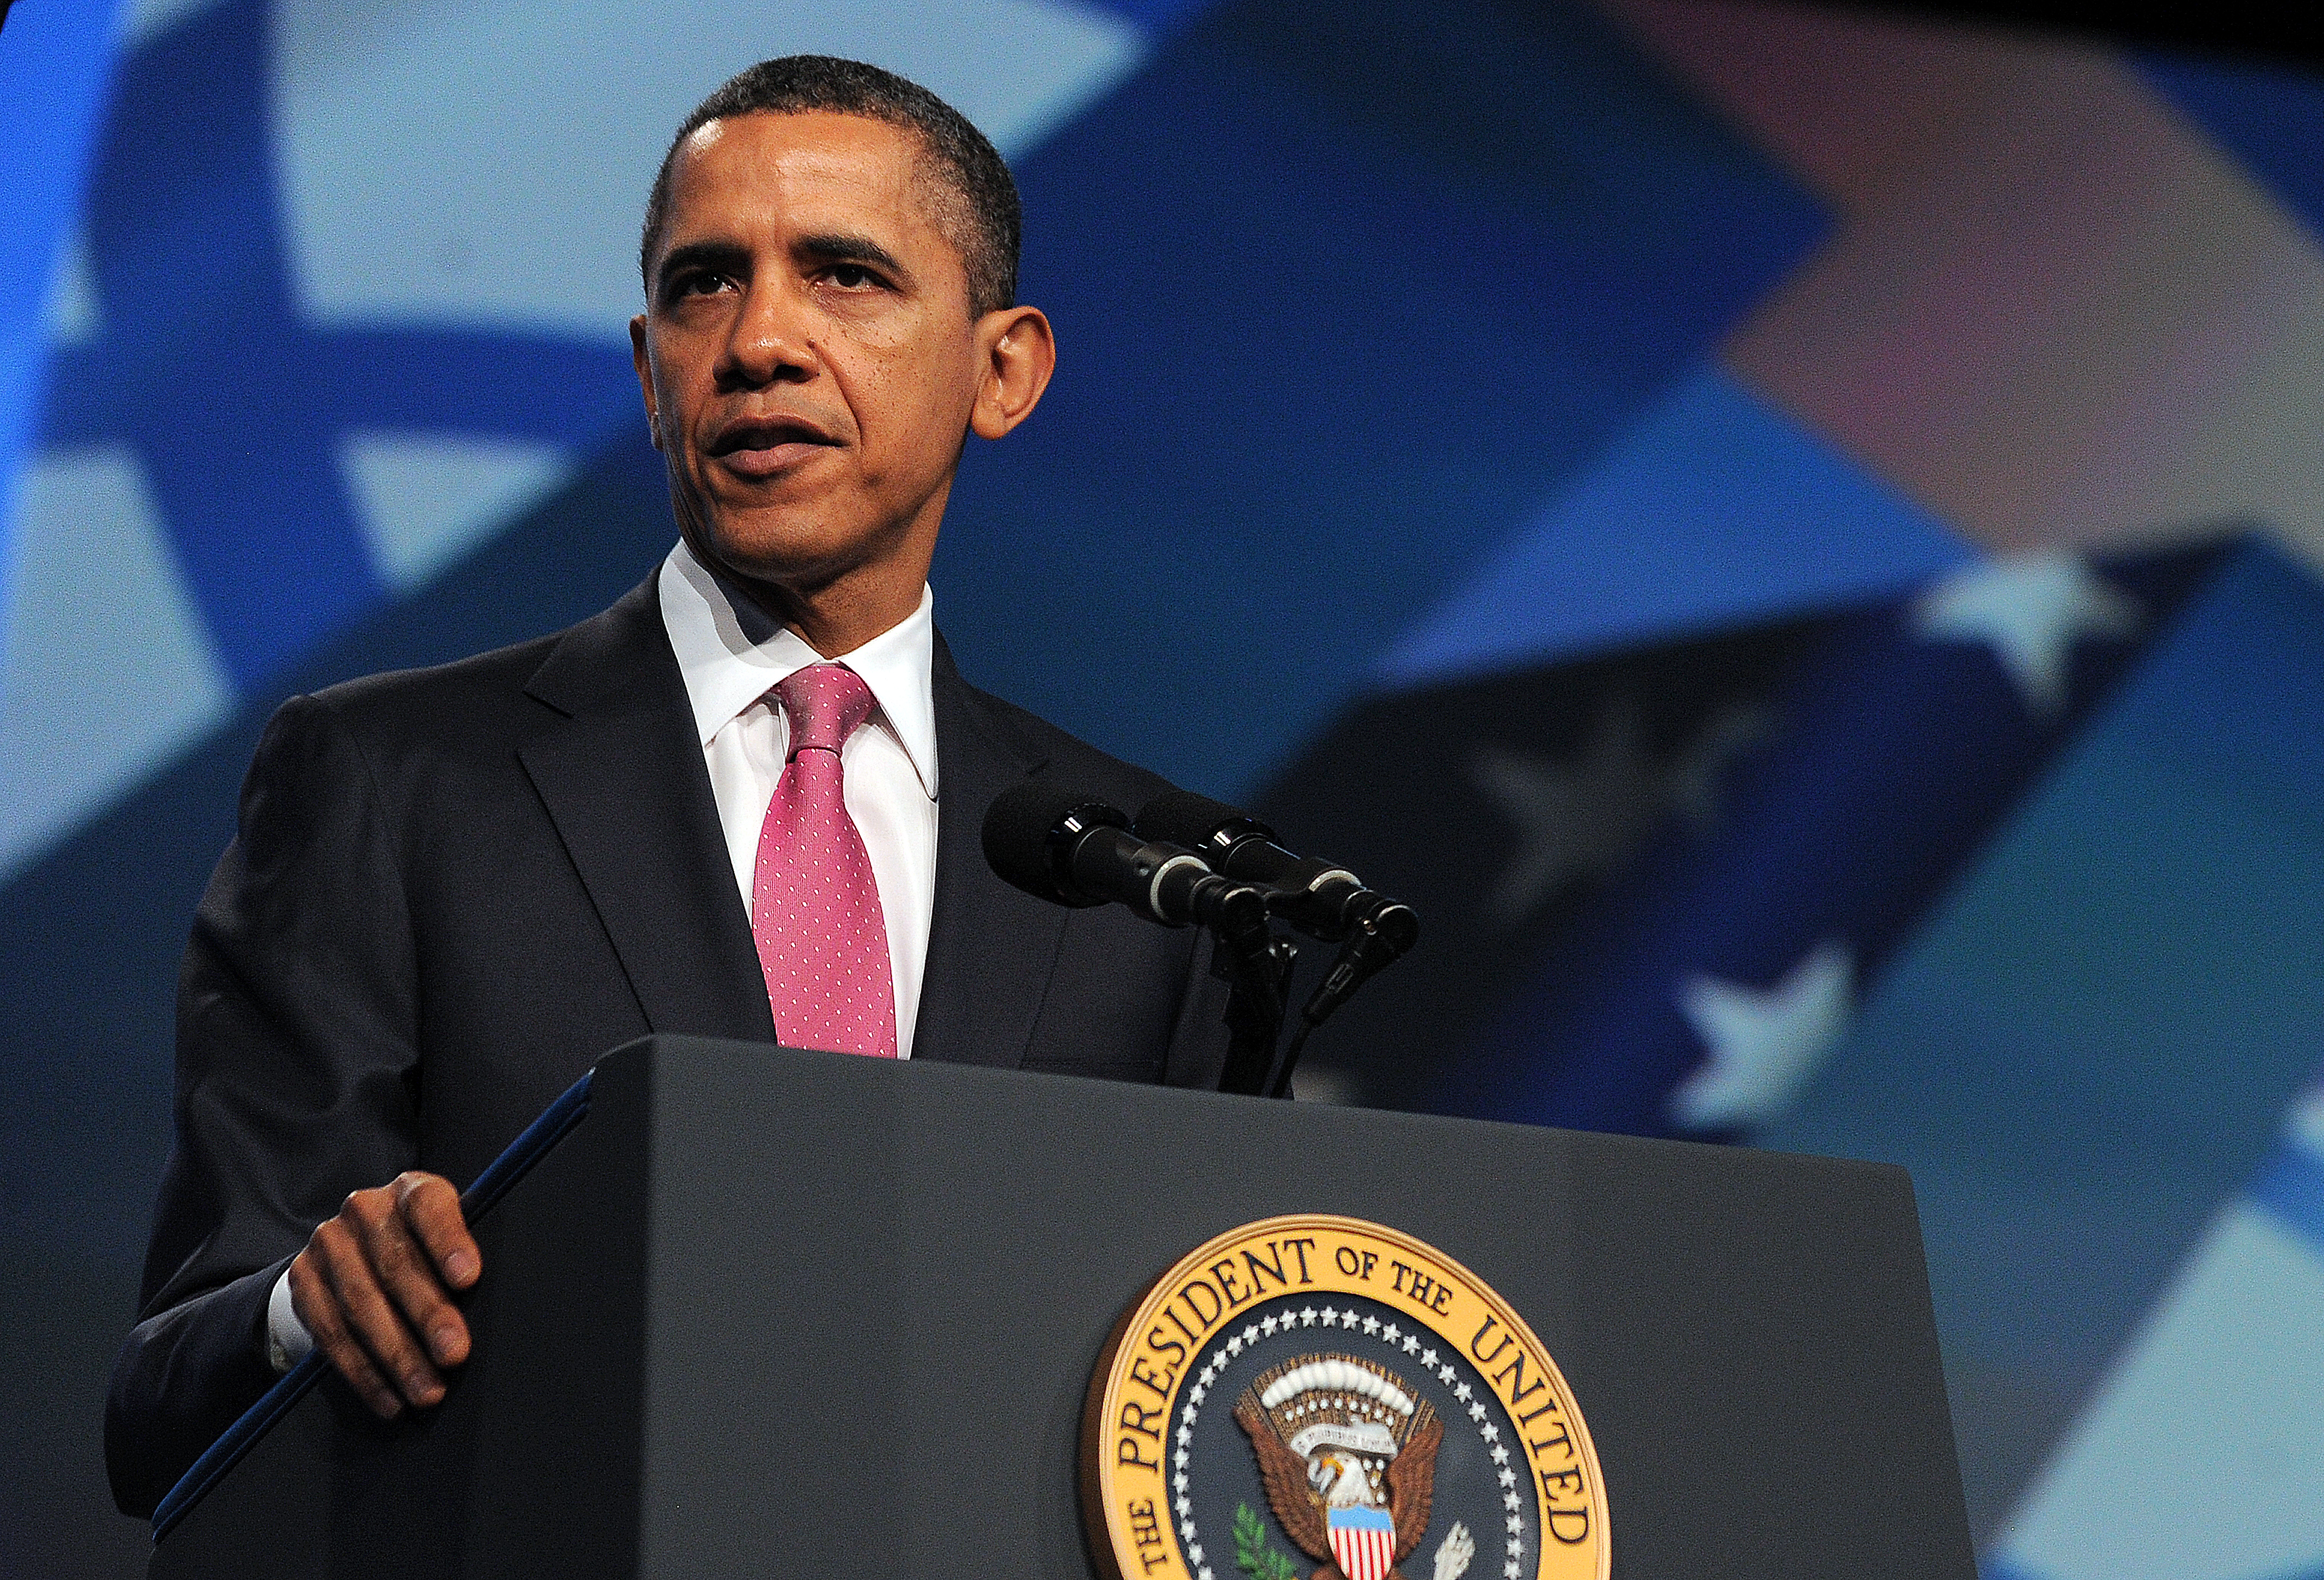 Obama talks tough at AIPAC, urges caution on Iran CBS News